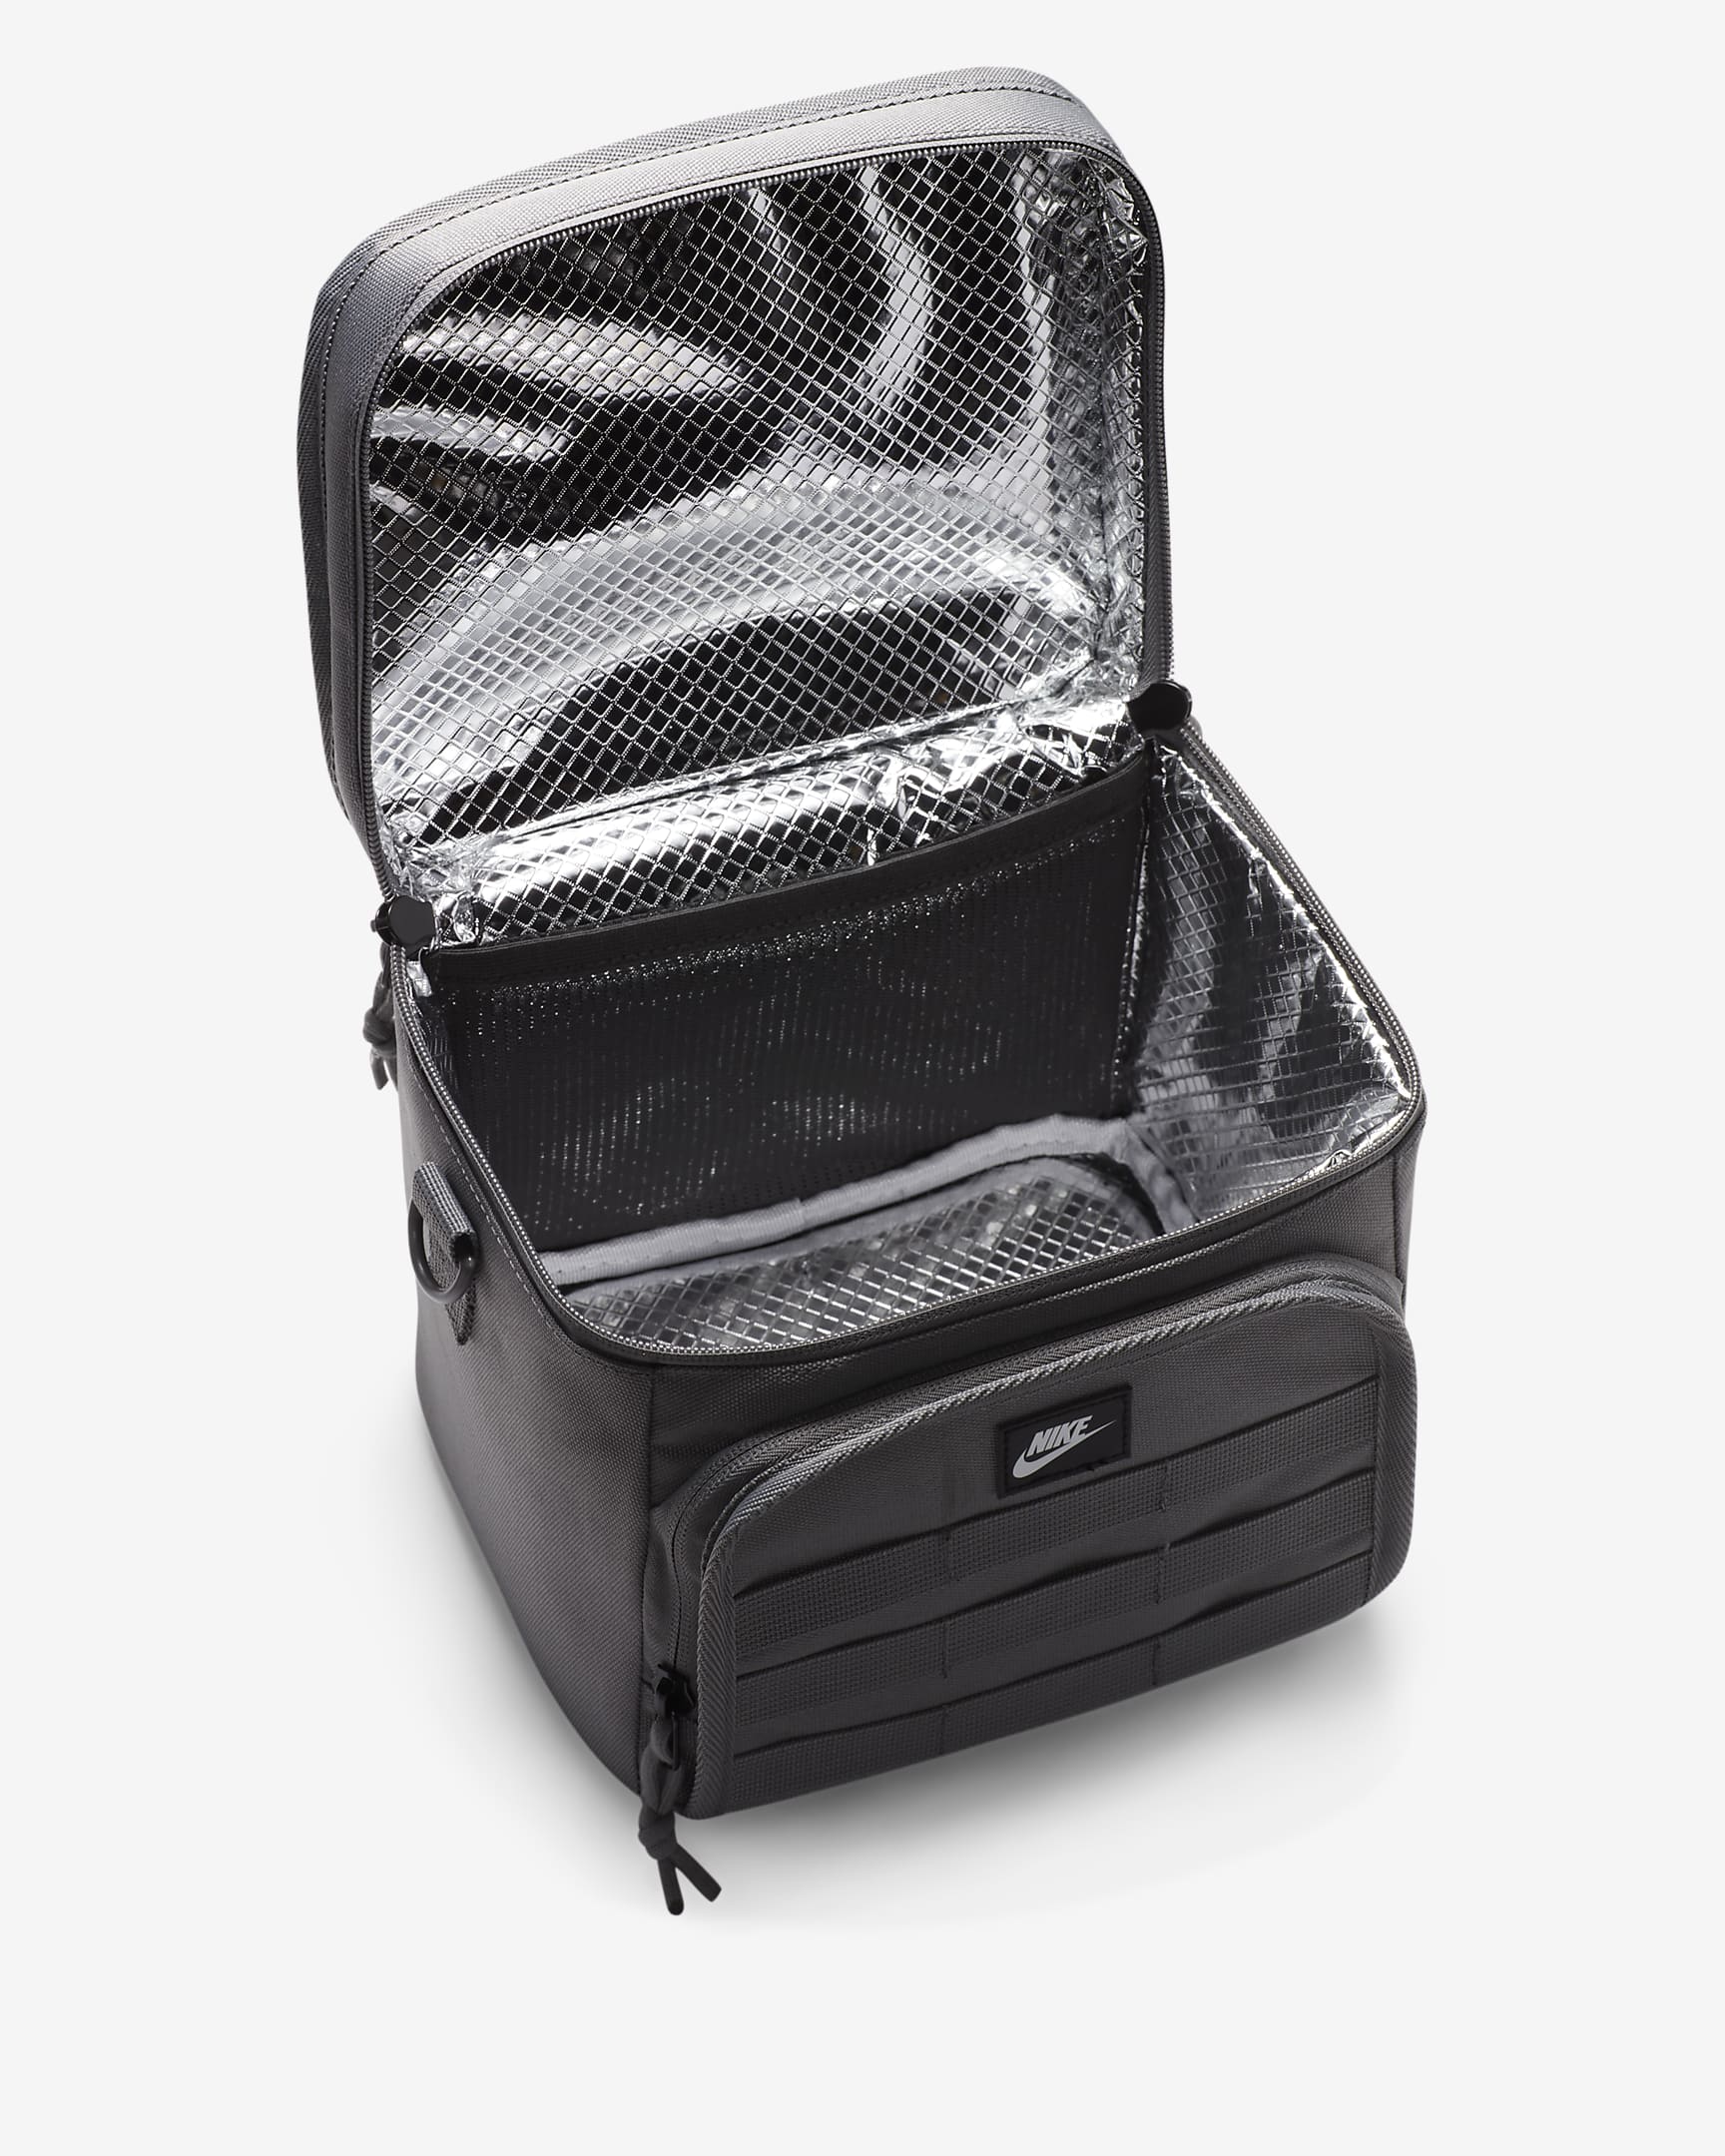 Nike Futura Sportswear Lunch Bag (6.75L) - Smoke Grey